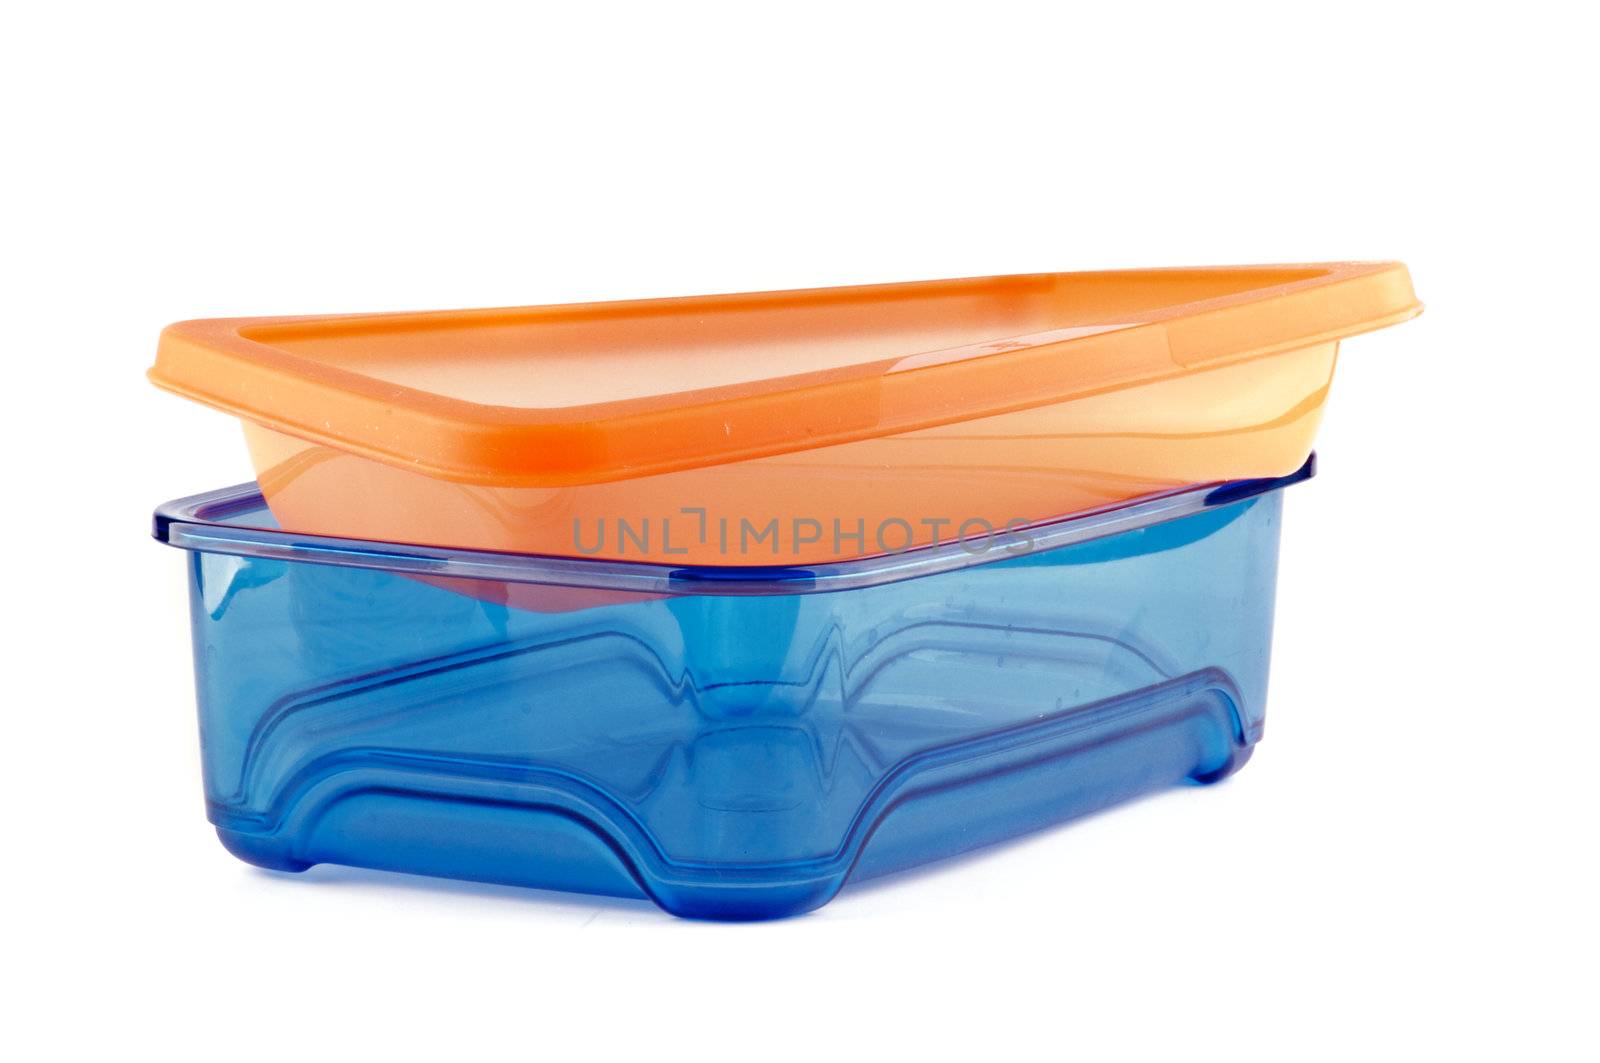 Blue and orange Plastic  Container isolatde on white background